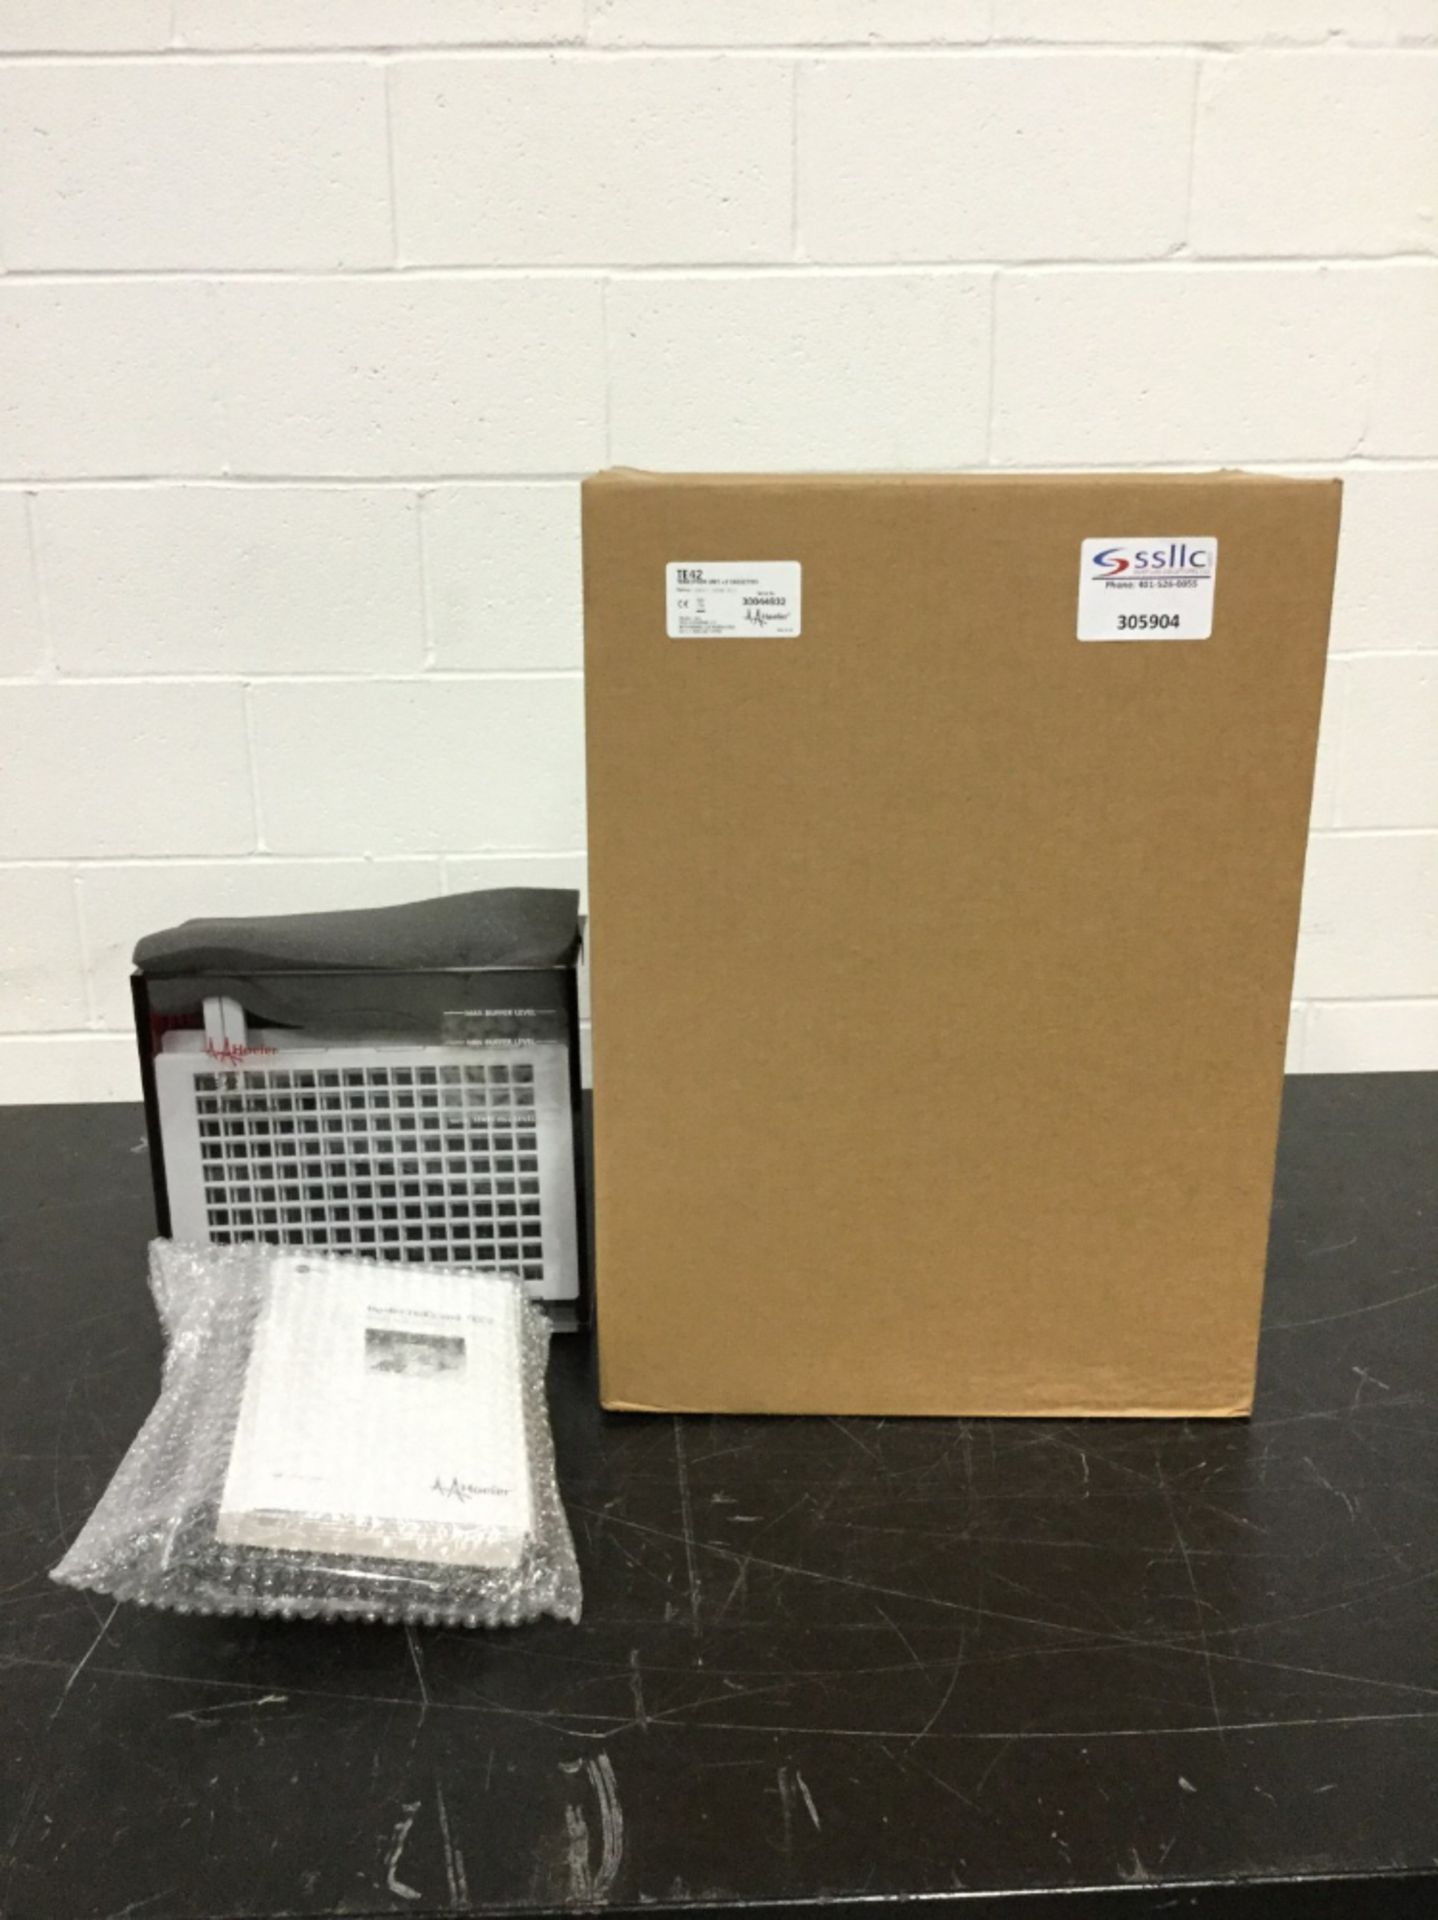 Hoefer TE42 Electrophoresis Transphor Unit +2 Cassettes New In Box